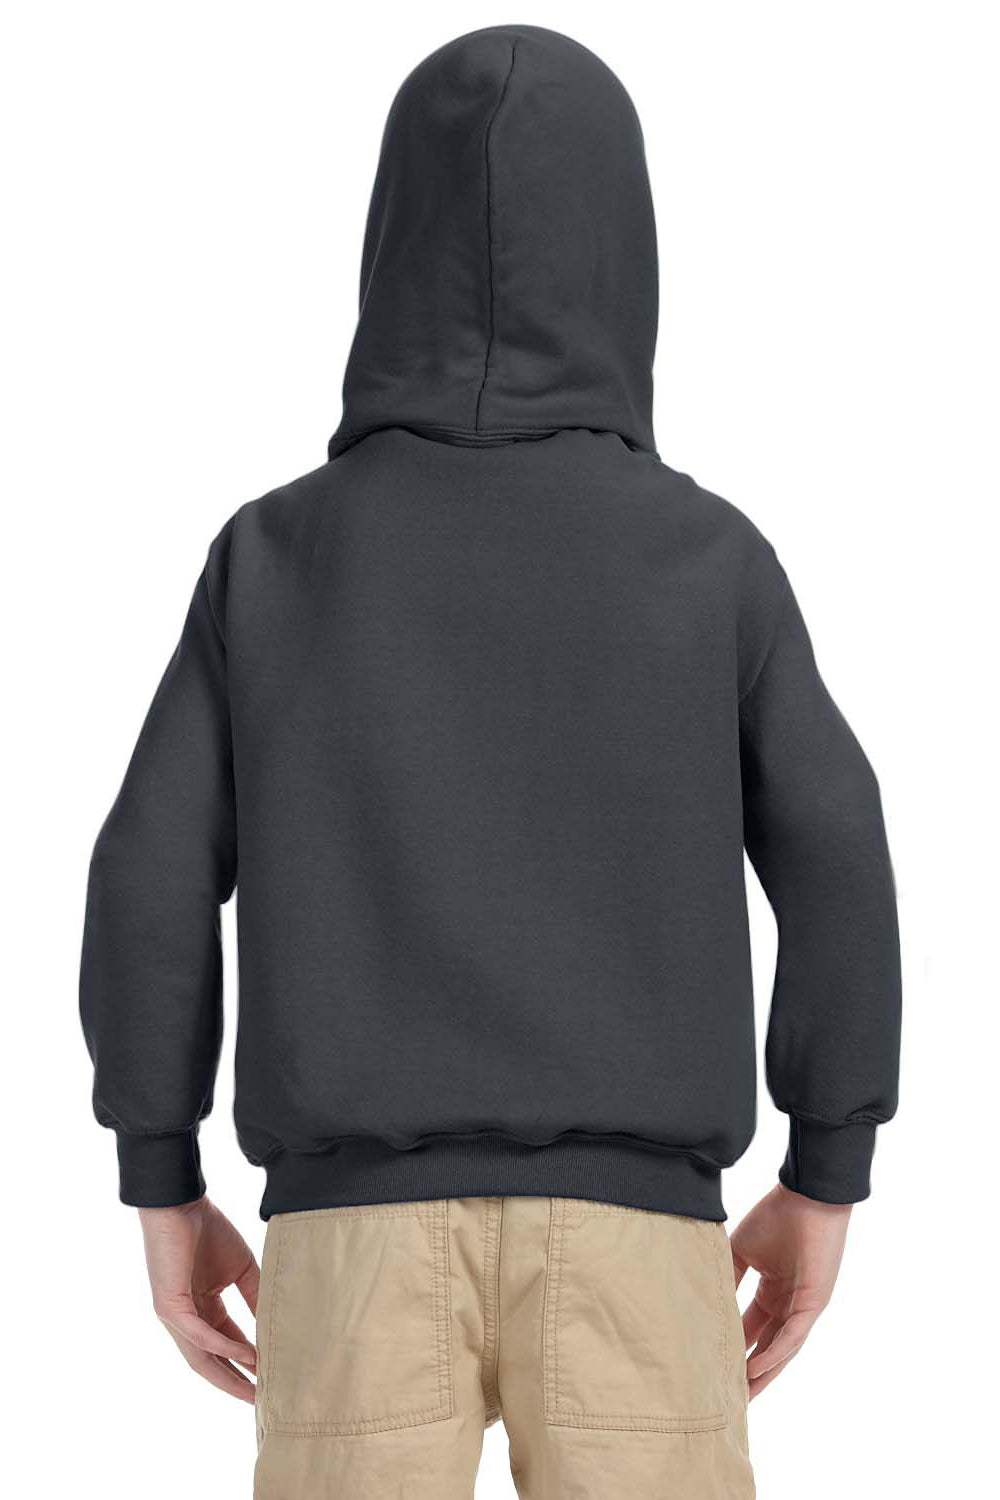 Gildan G185B Youth Hooded Sweatshirt Hoodie Charcoal Grey Back